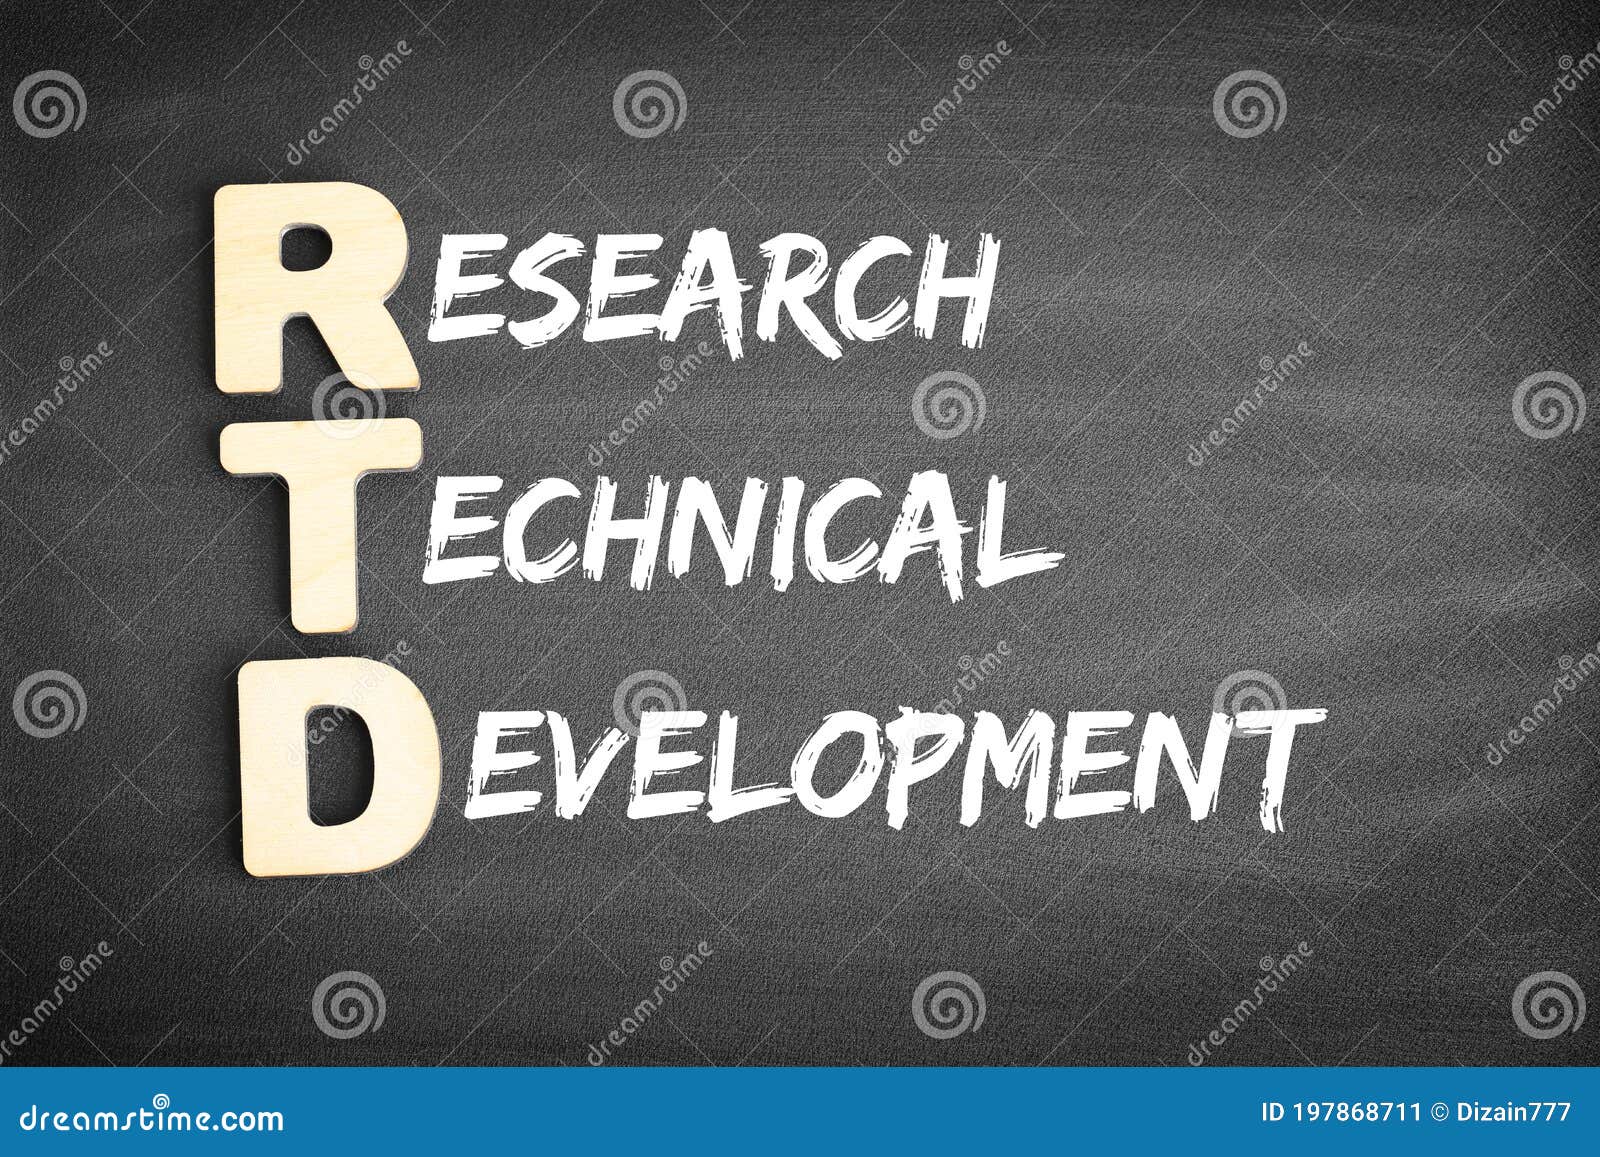 rtd - research technical development